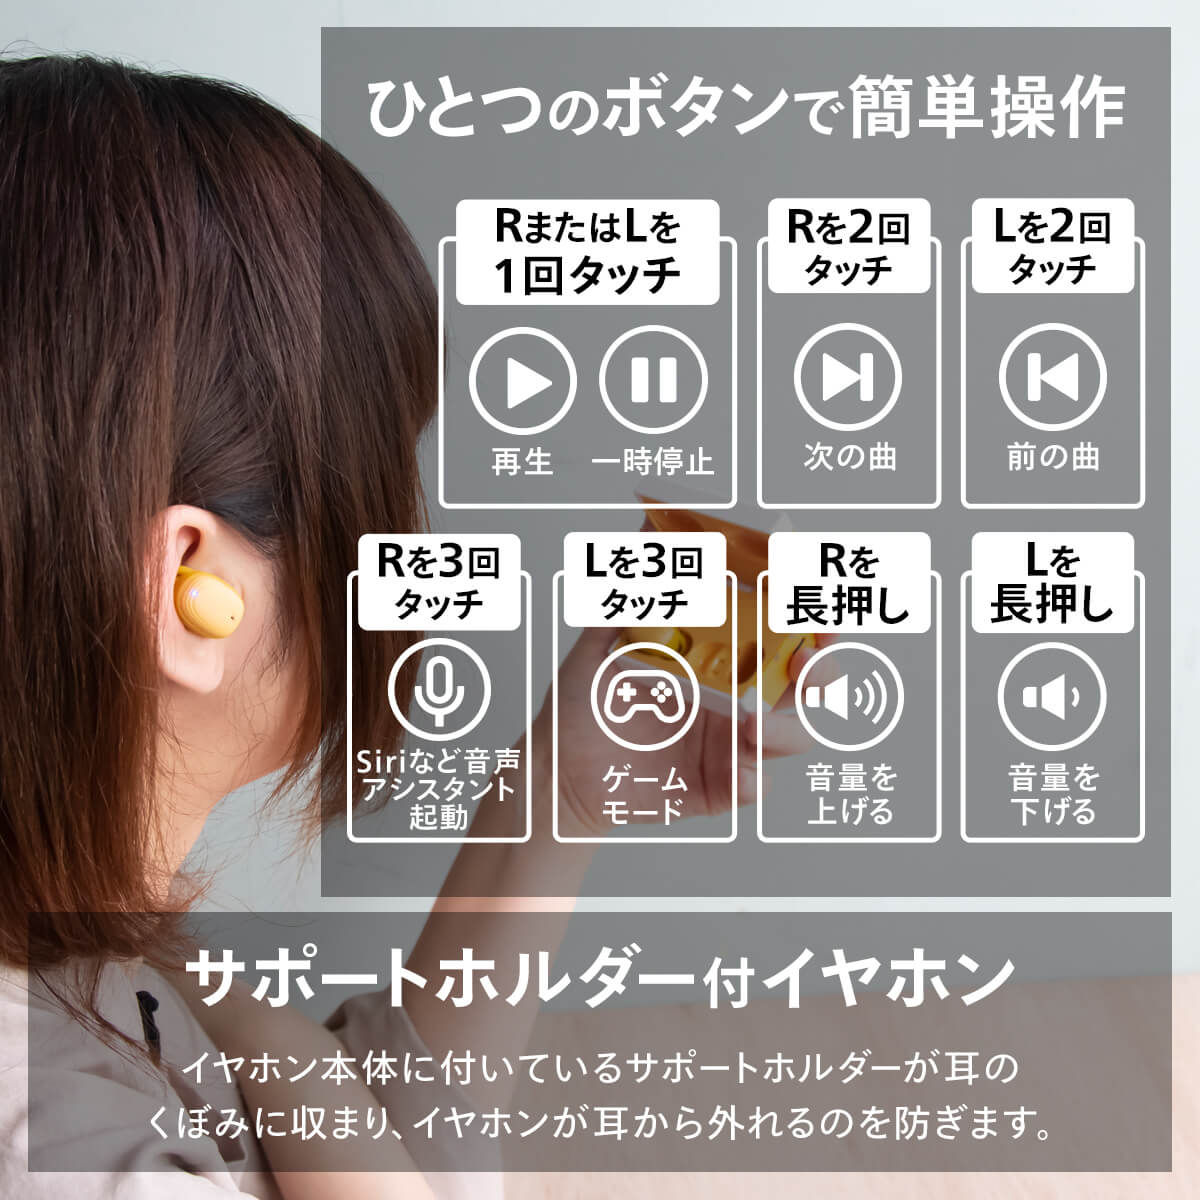 【販売終了】cheero nyanboard Wireless Earphones